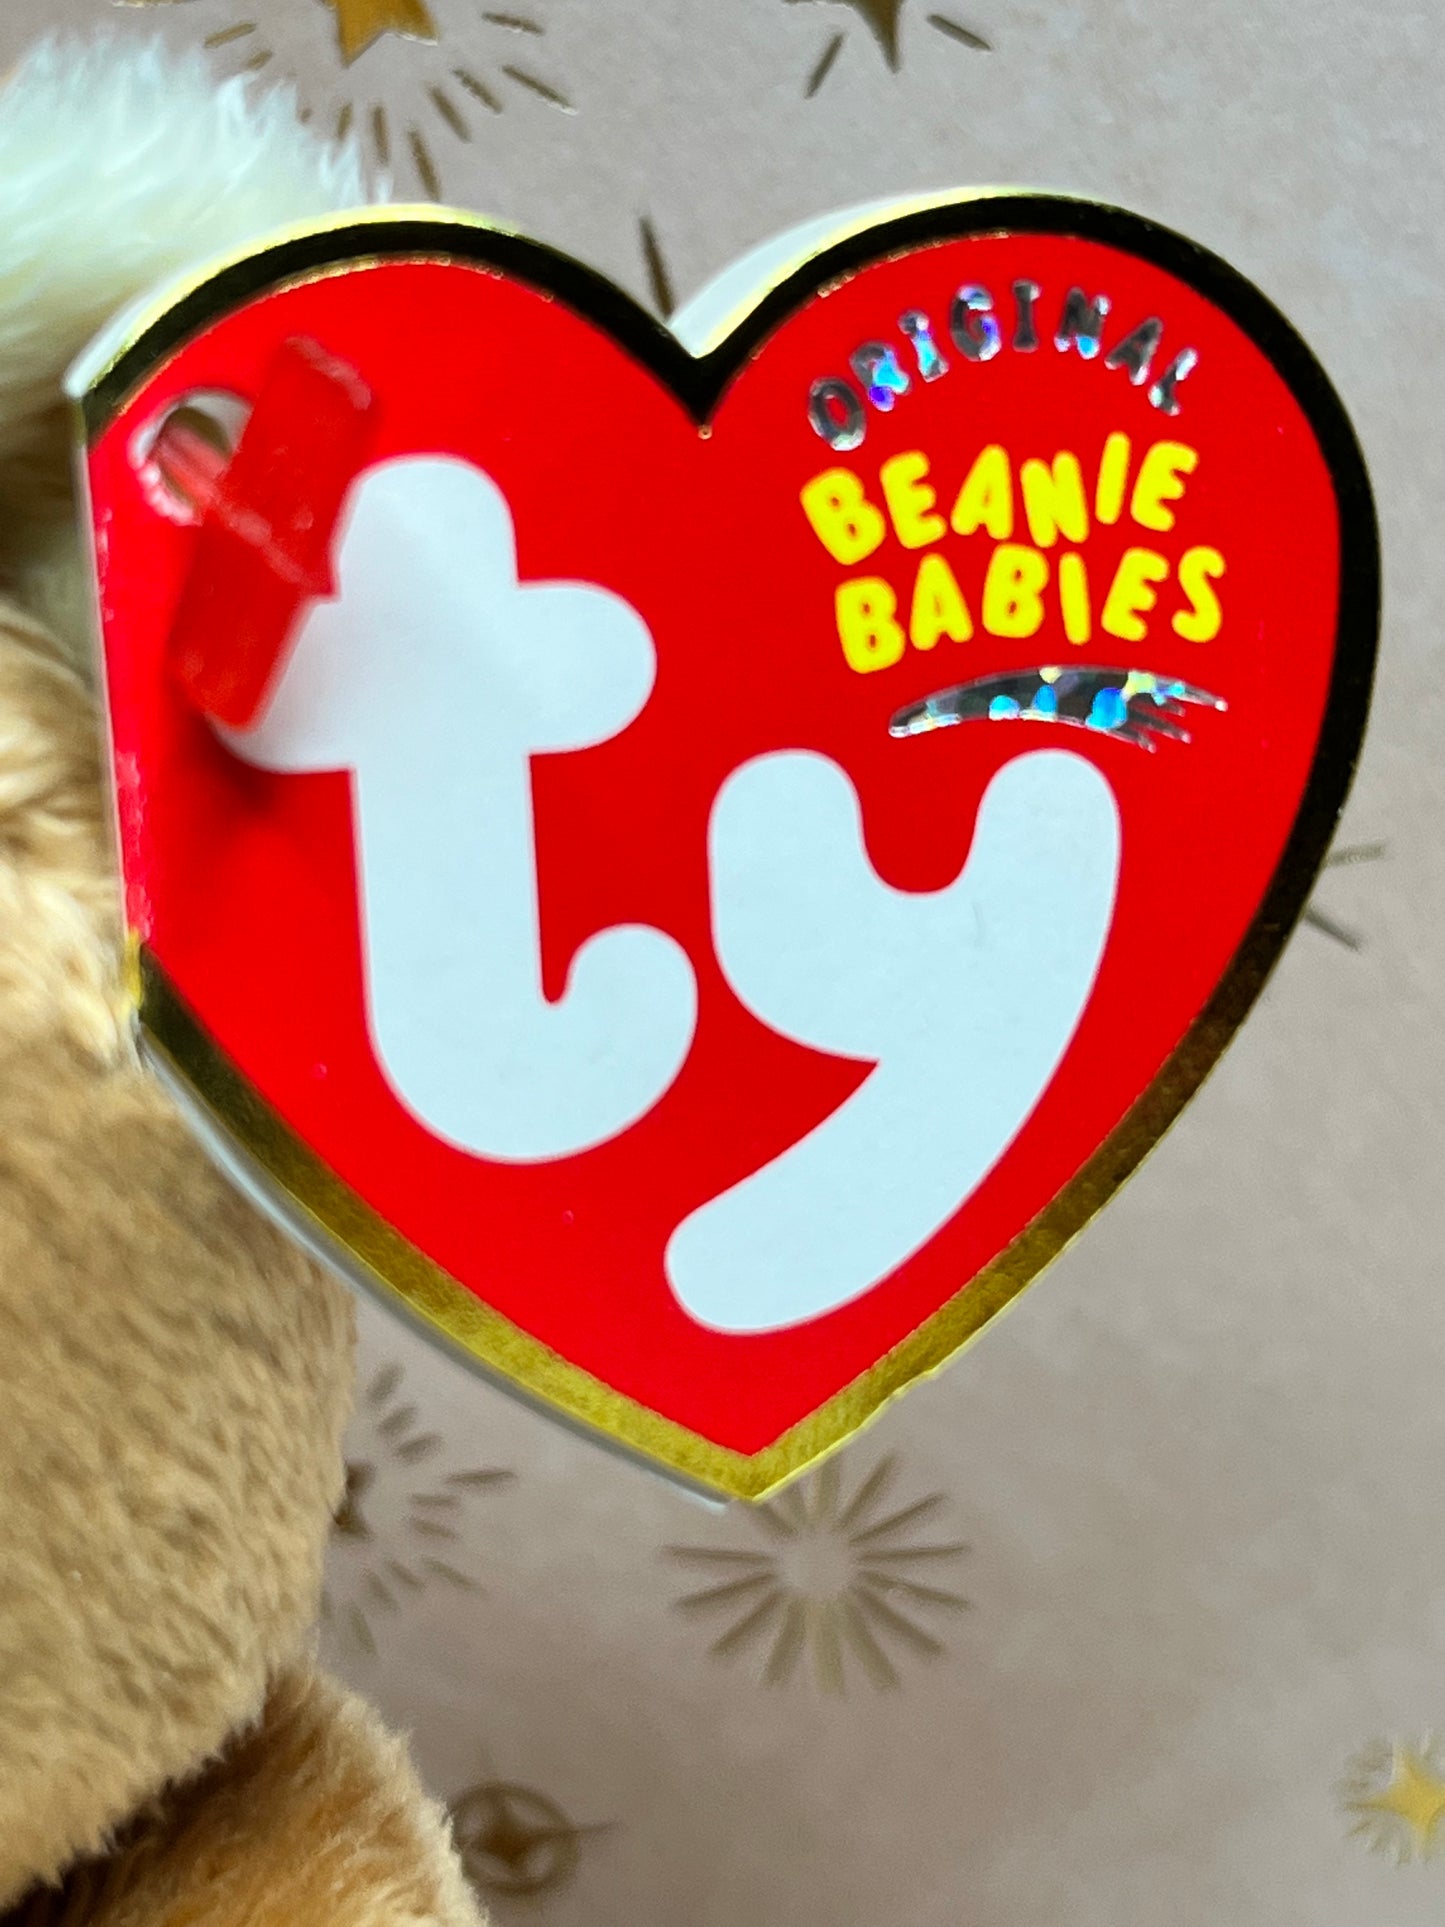 TY Beanie Babies “Always” The Bear, November 30 2004